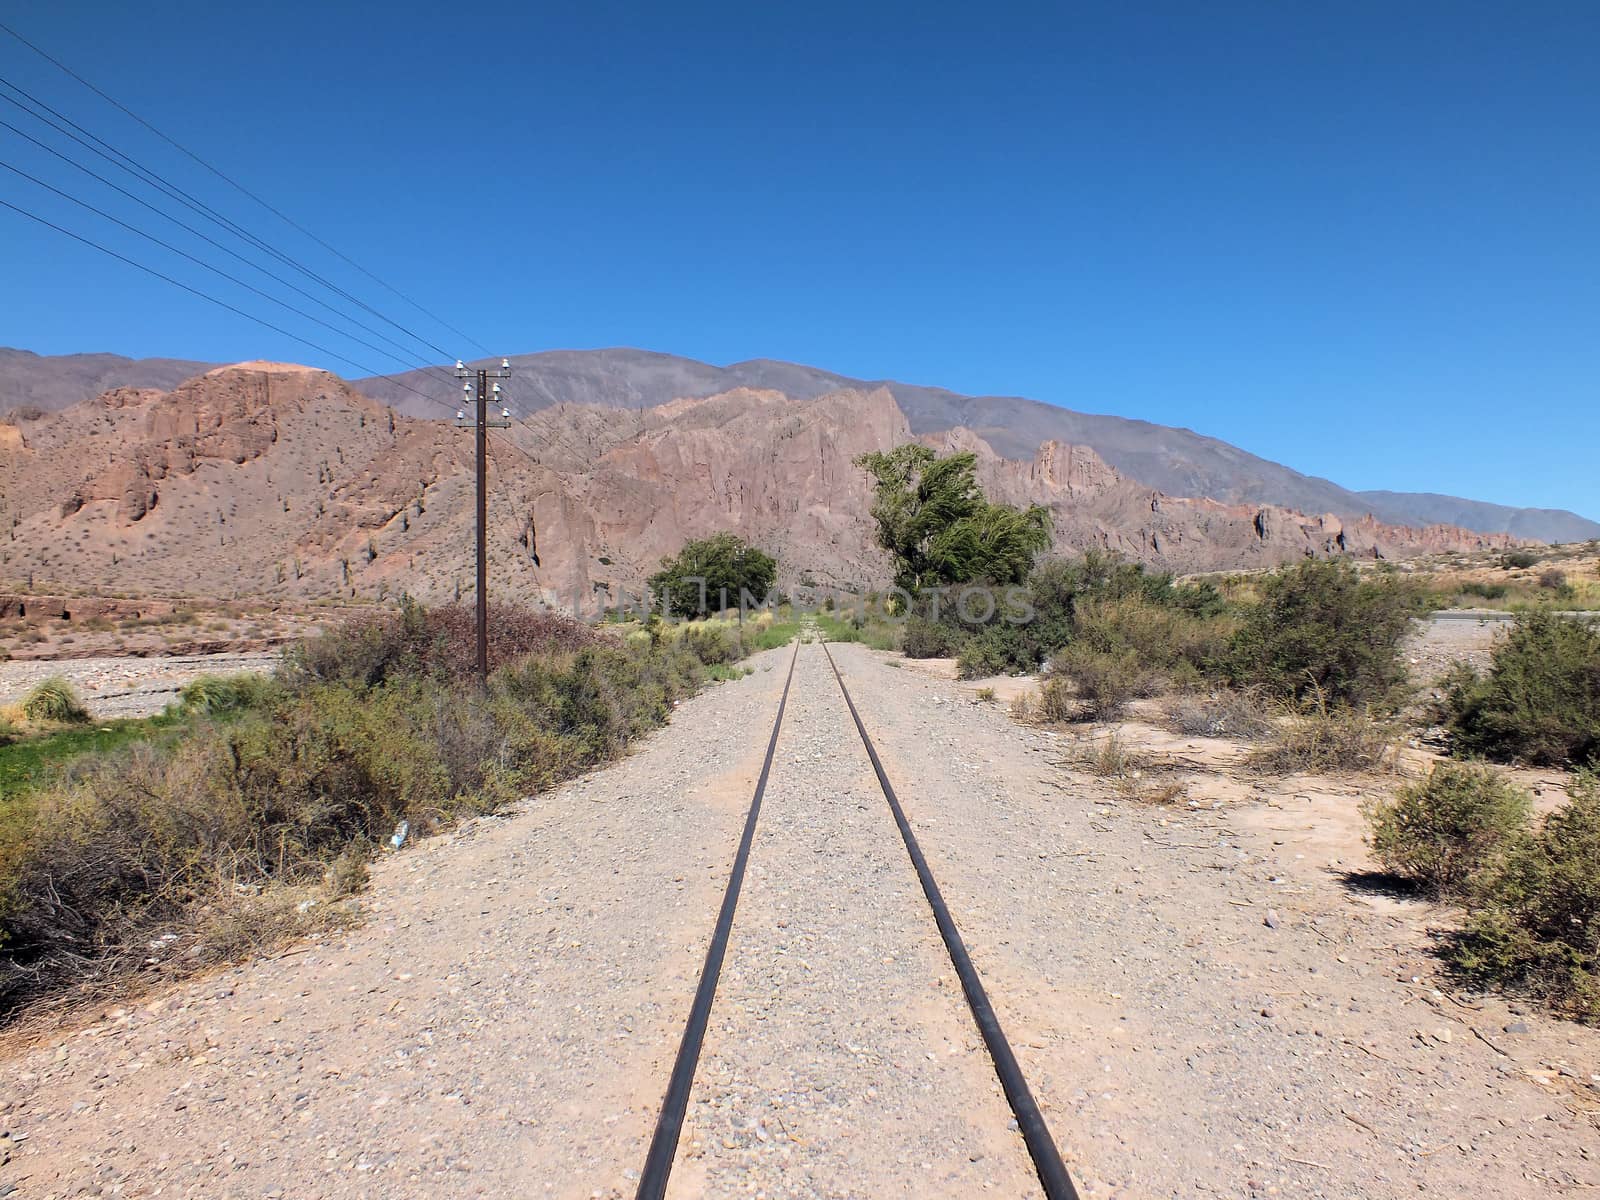 The railway line used by La Tren a las Nubes - Train To the Clouds as it passes through the Quebrada del Toro en route to San Antonio